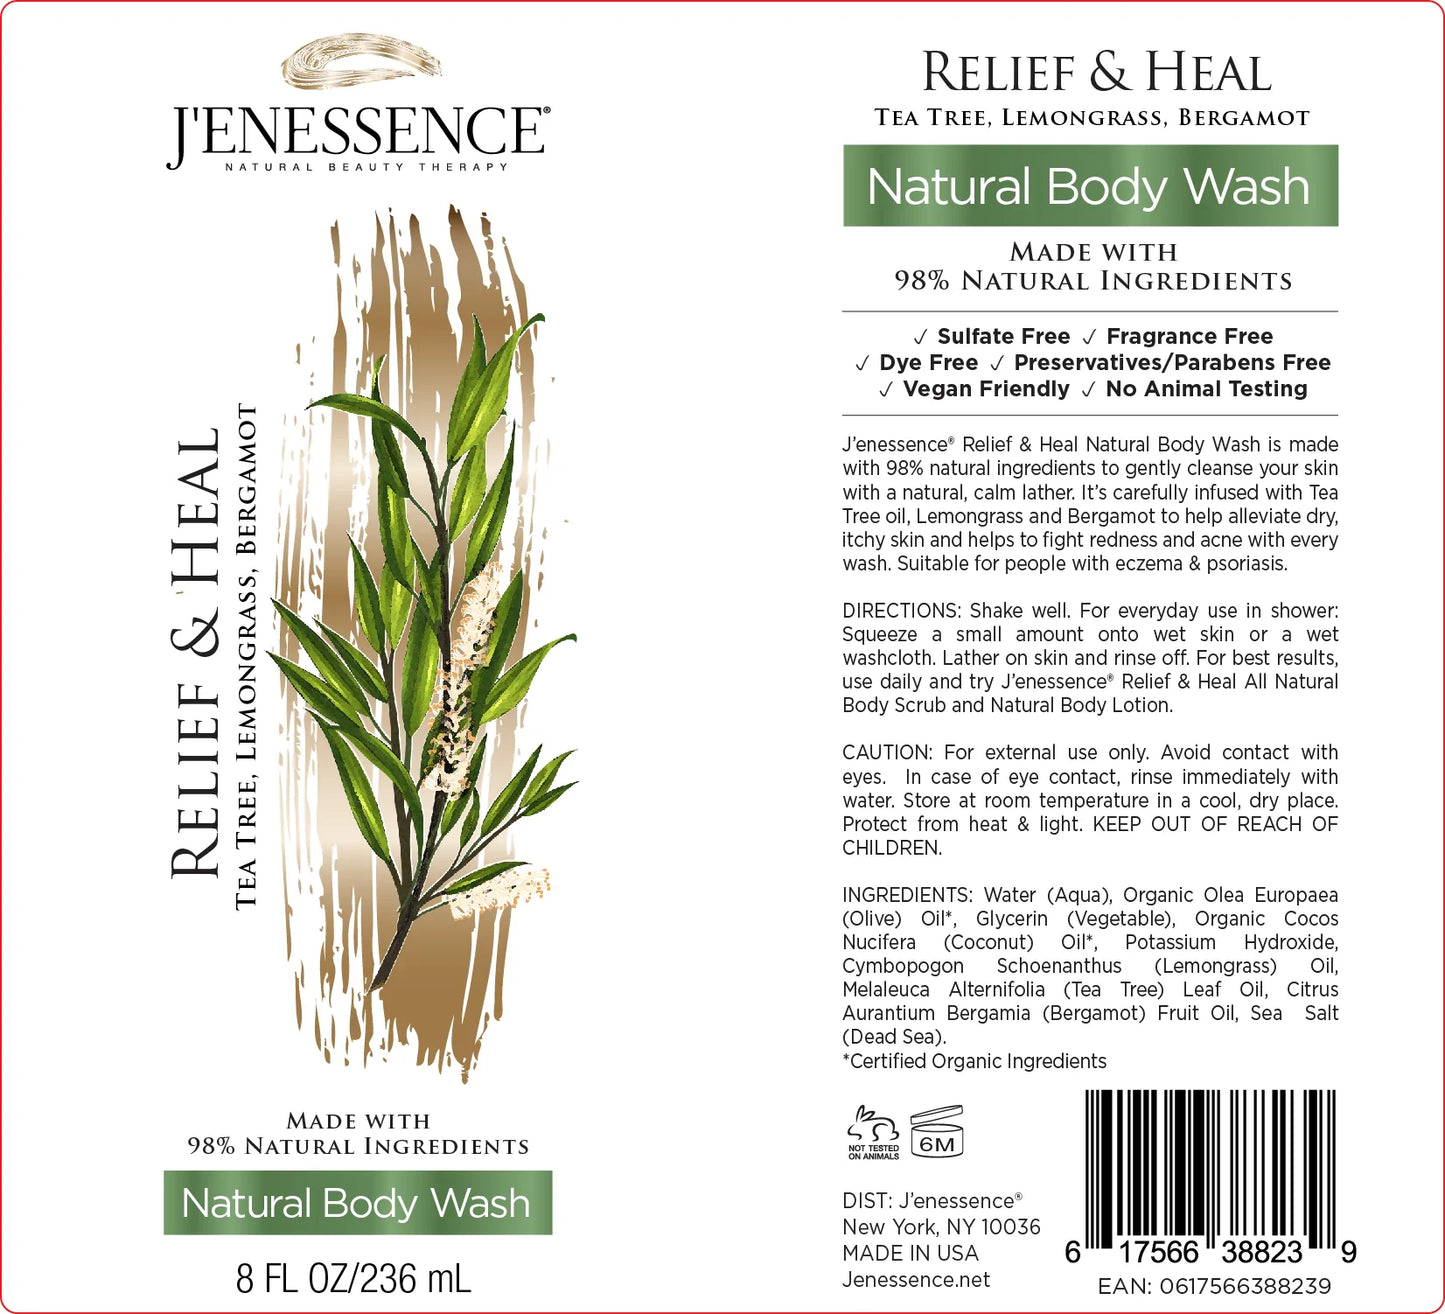 Relief & Heal Natural Therapeutic Body Wash (Lemongrass, Tea Tree, Bergamot)